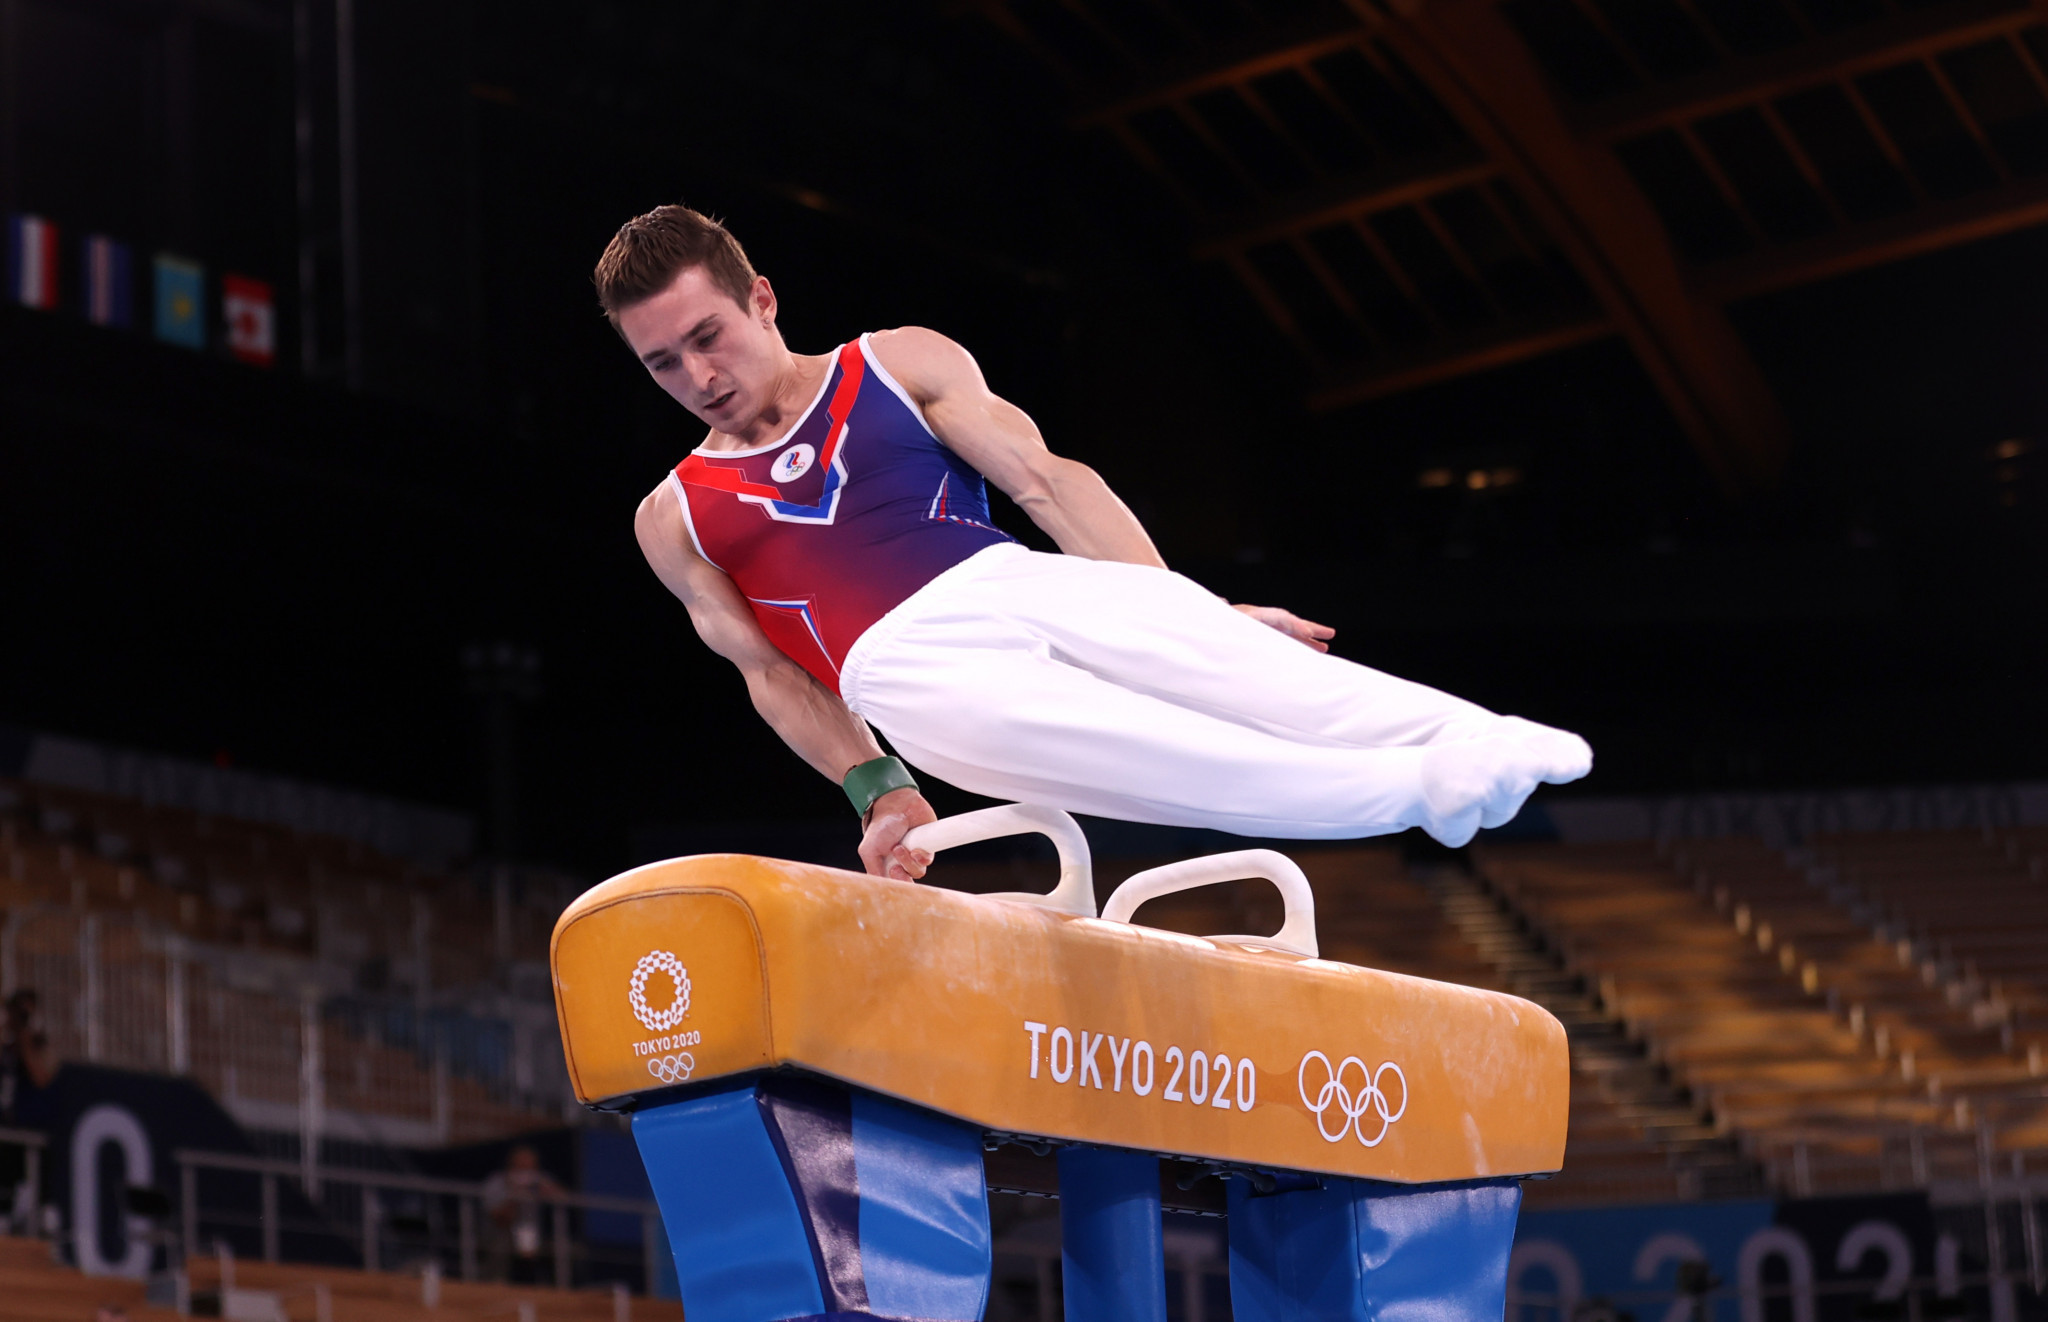 David Belyavskiy has won three Olympic medals ©Getty Images